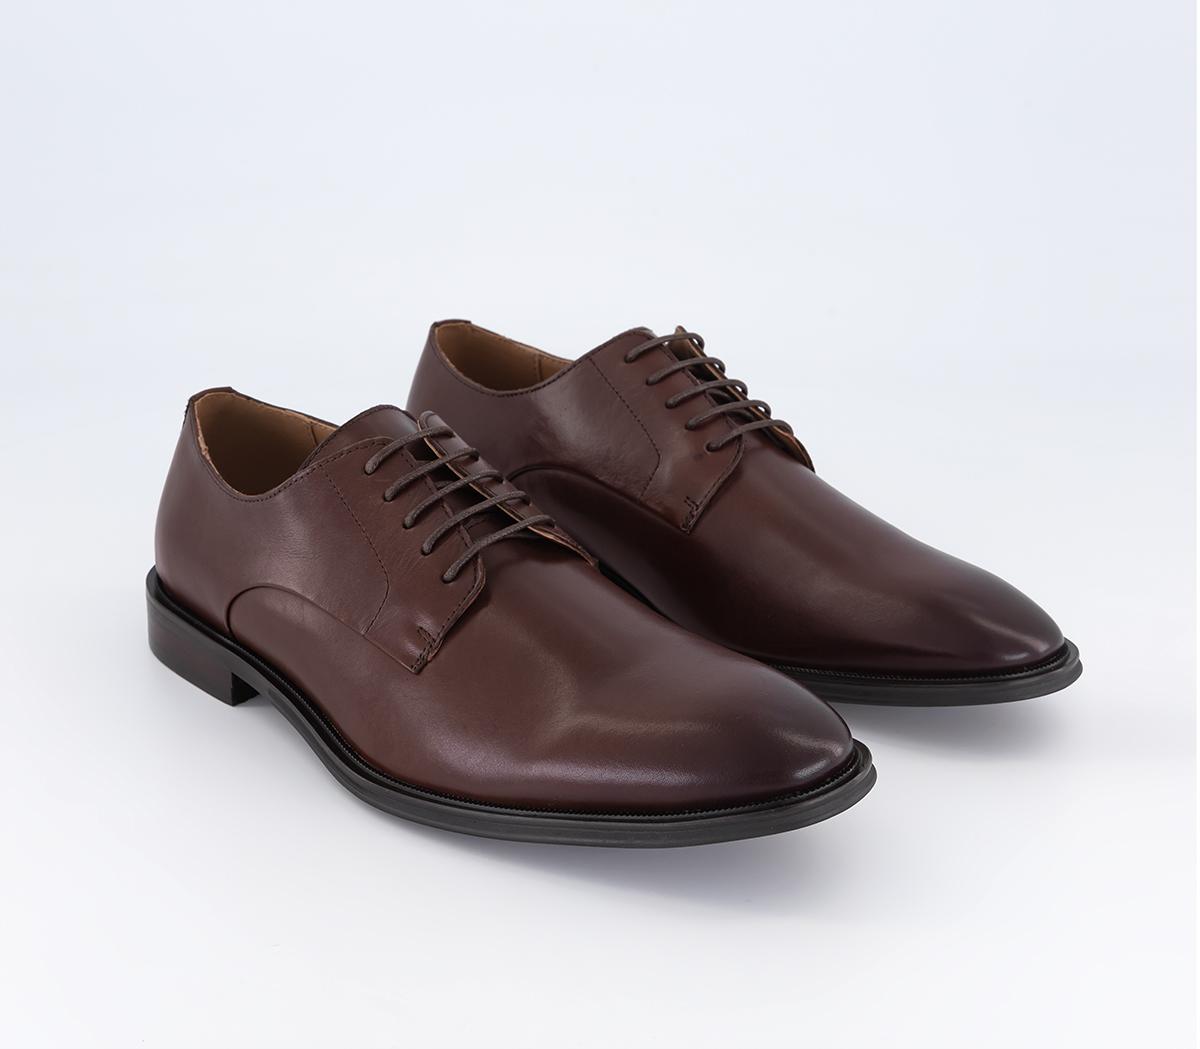 OFFICE Midland Plain Toe Derby Shoes Brown Leather - Men’s Smart Shoes